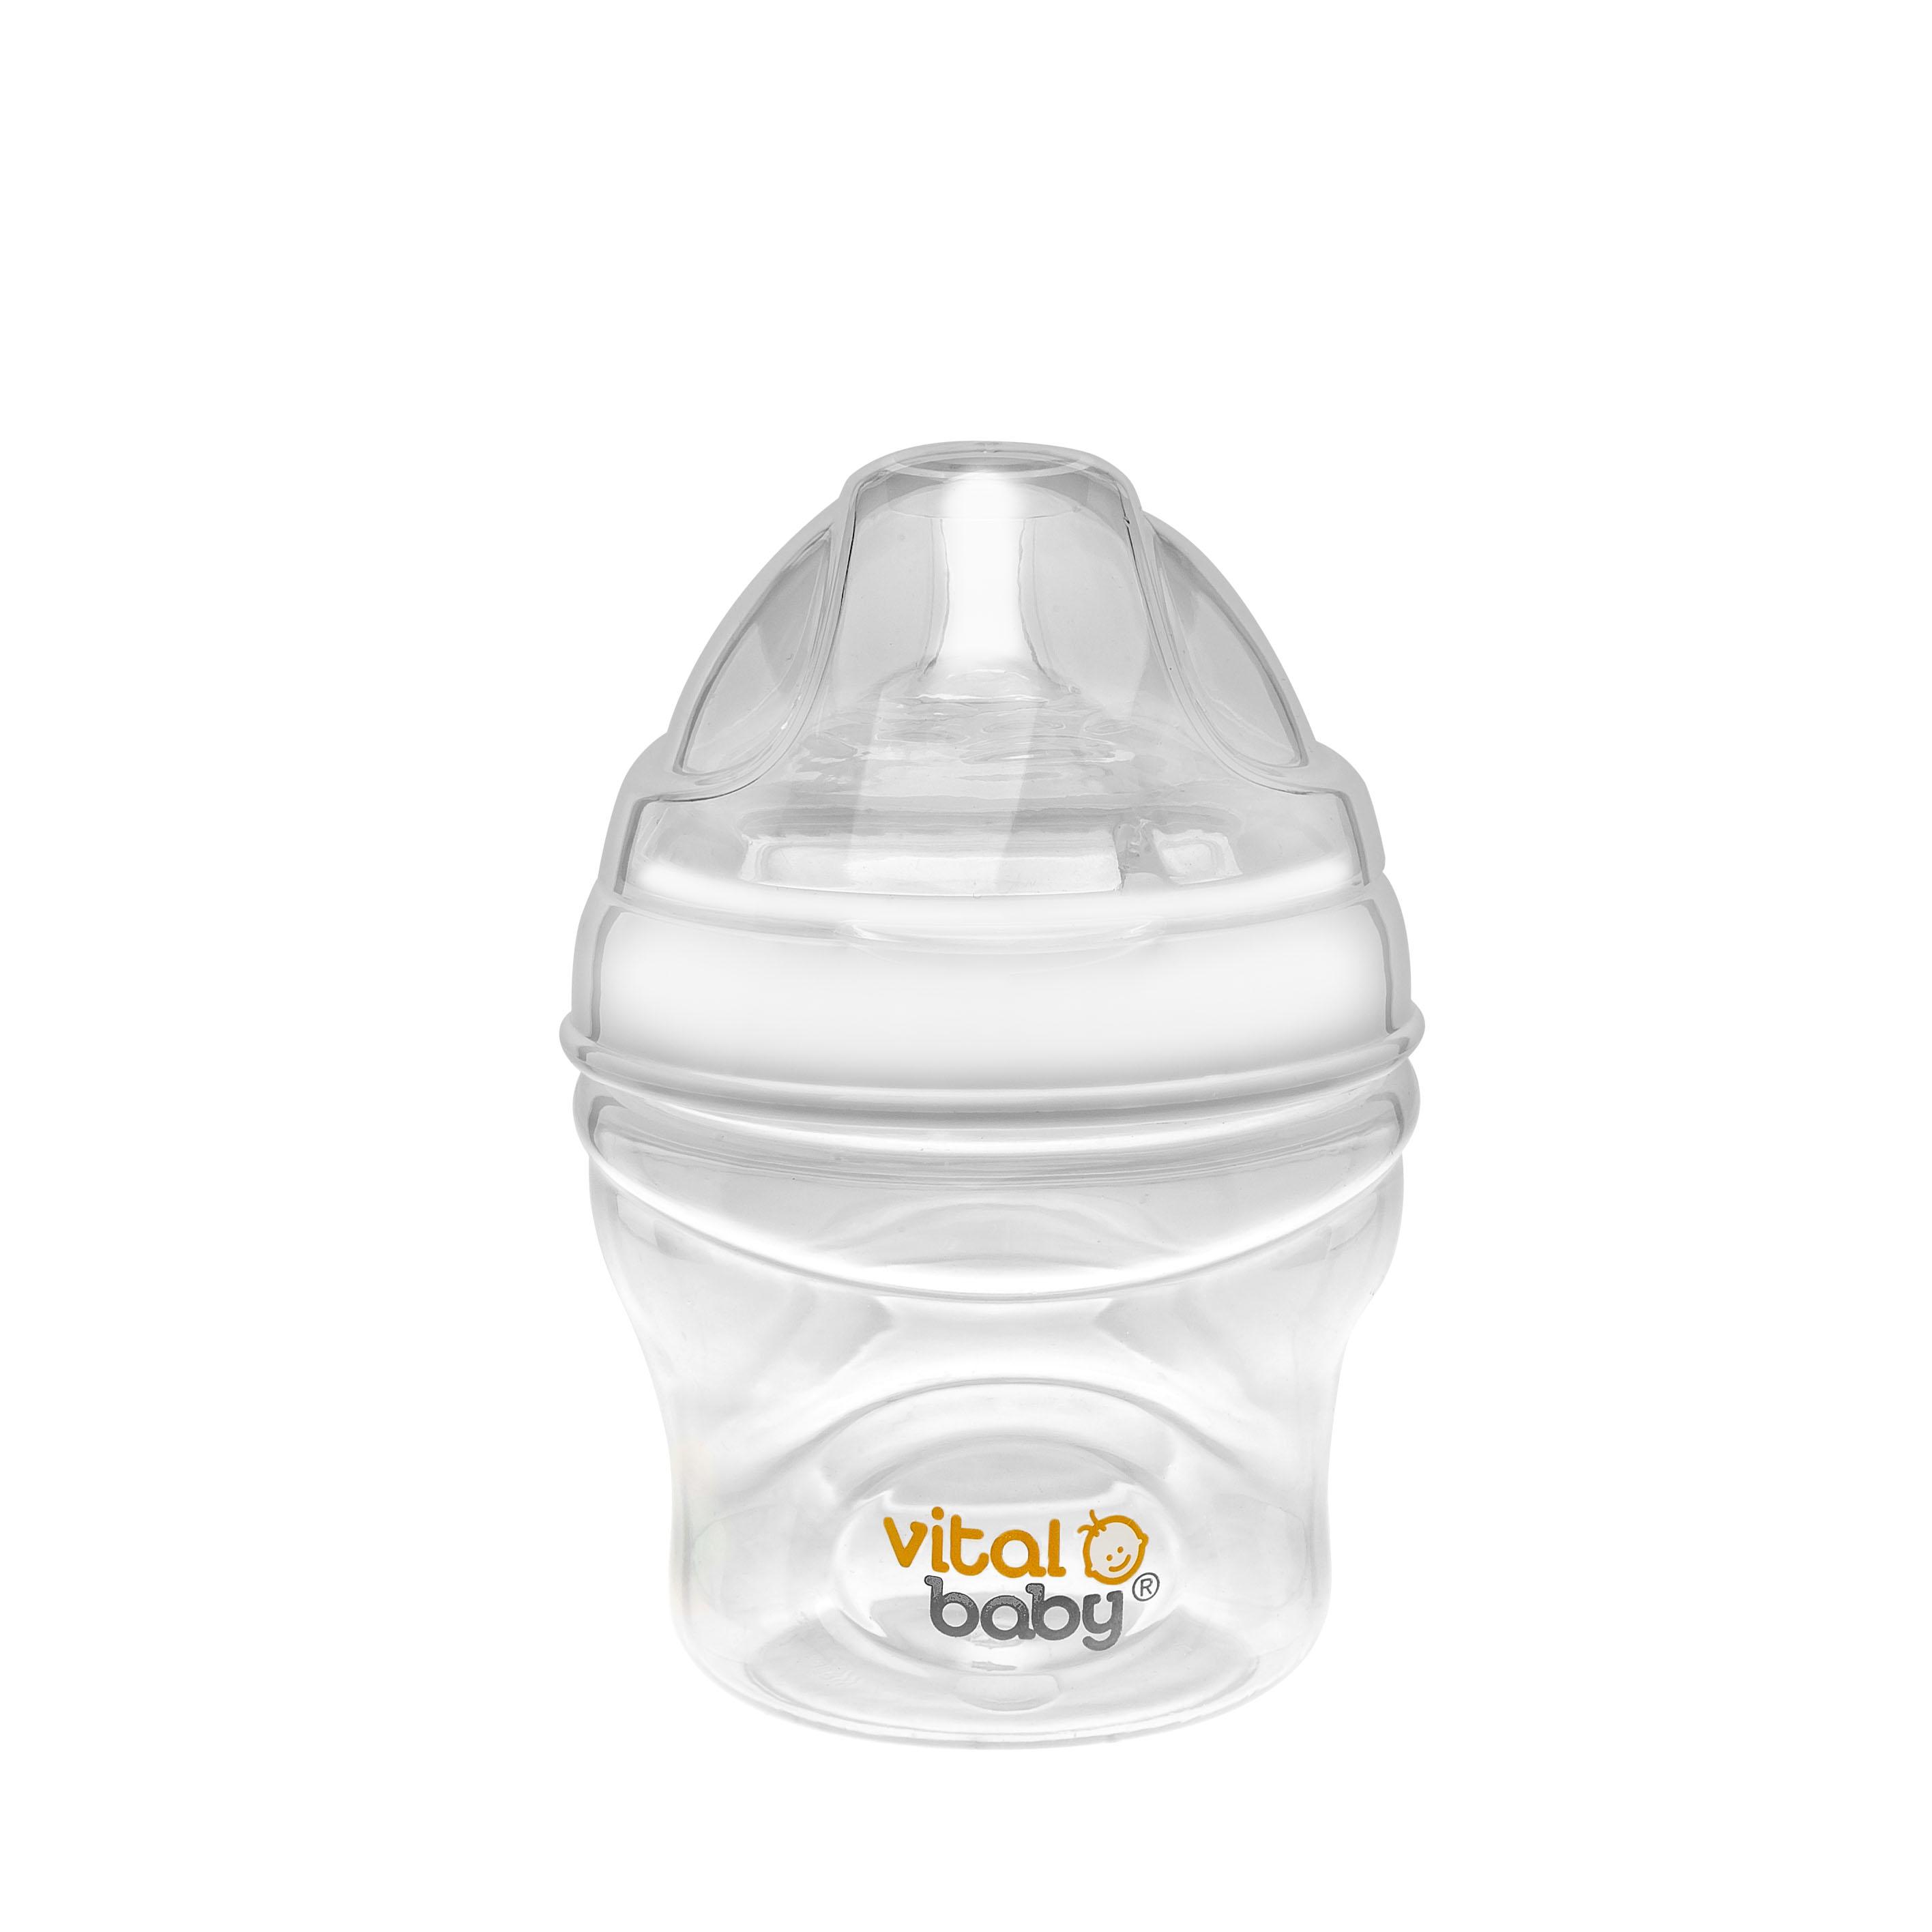 Vital Baby, Nurture breast-like feeding bottle review